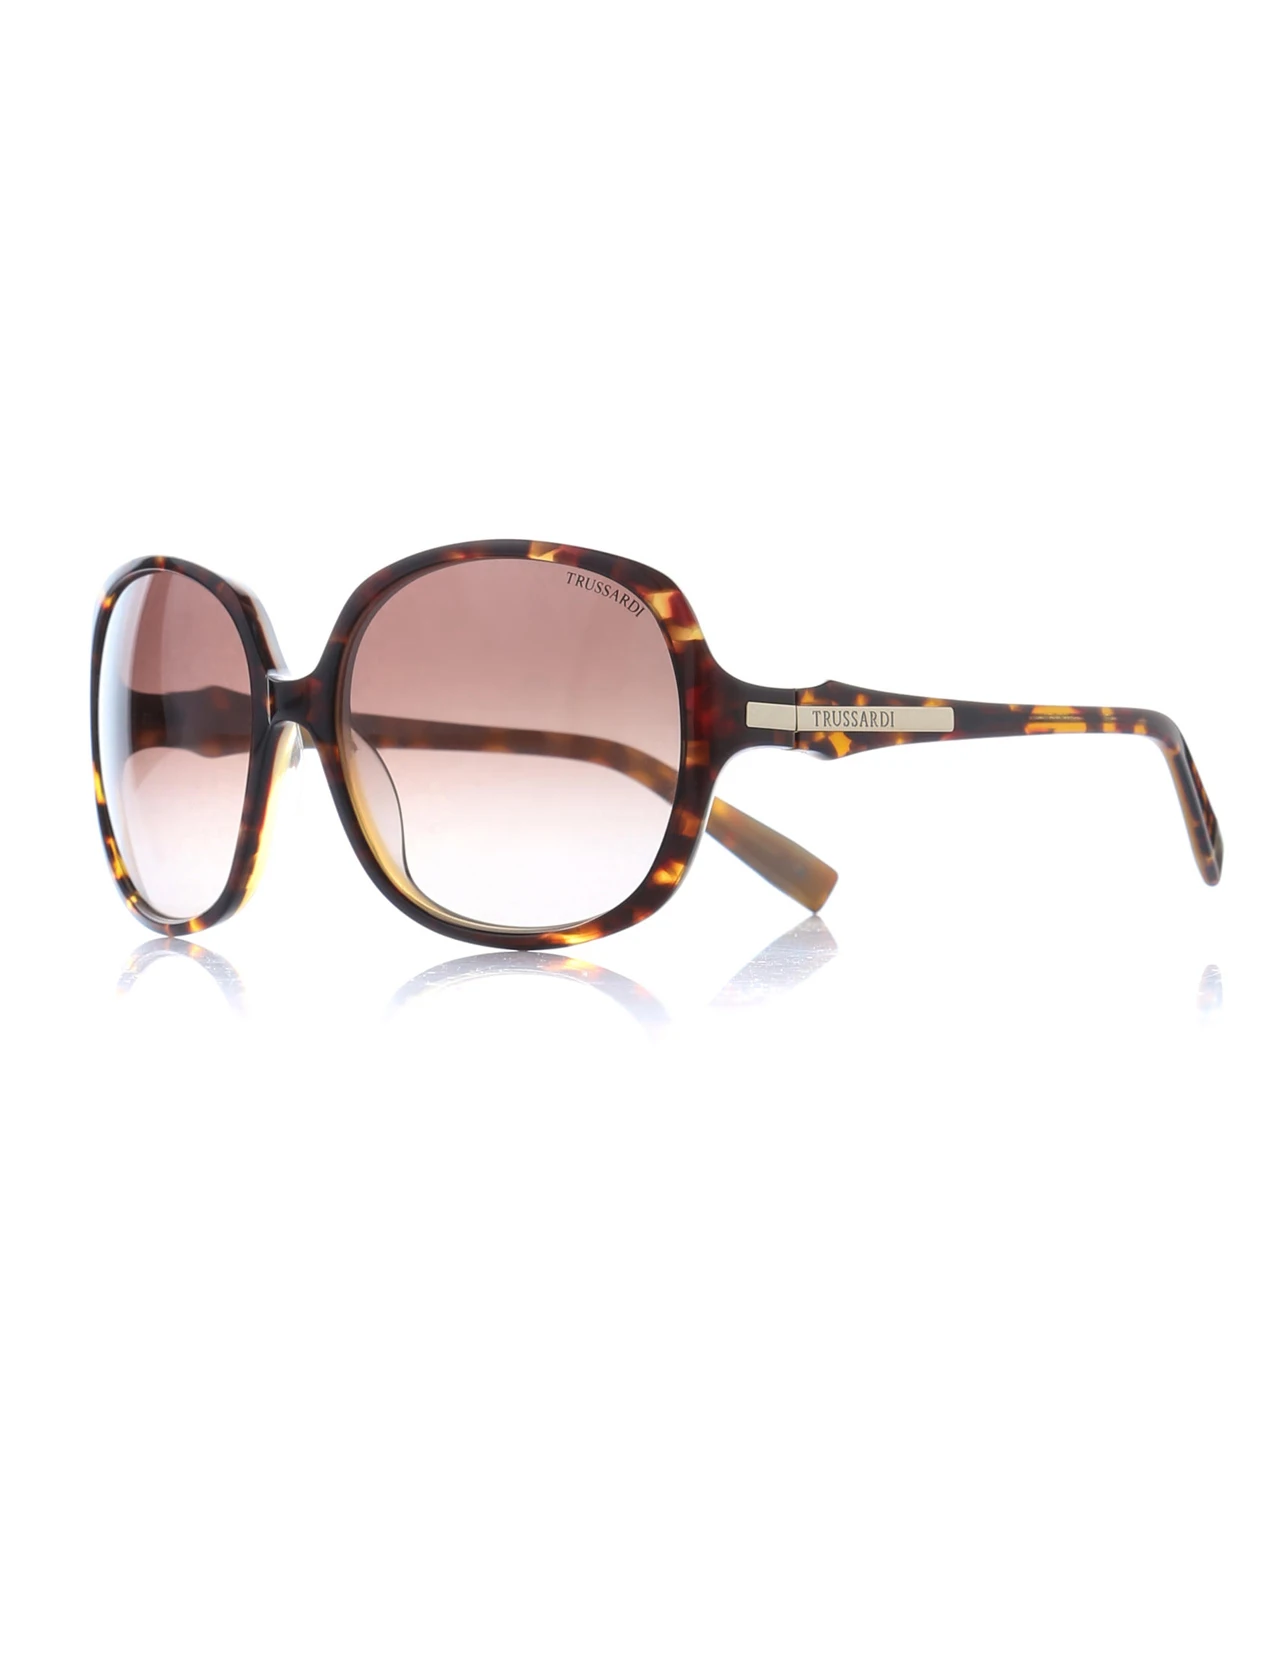 

Women's sunglasses trs 128 51 hv bone Brown organic oval aval 57-16-135 trussardi